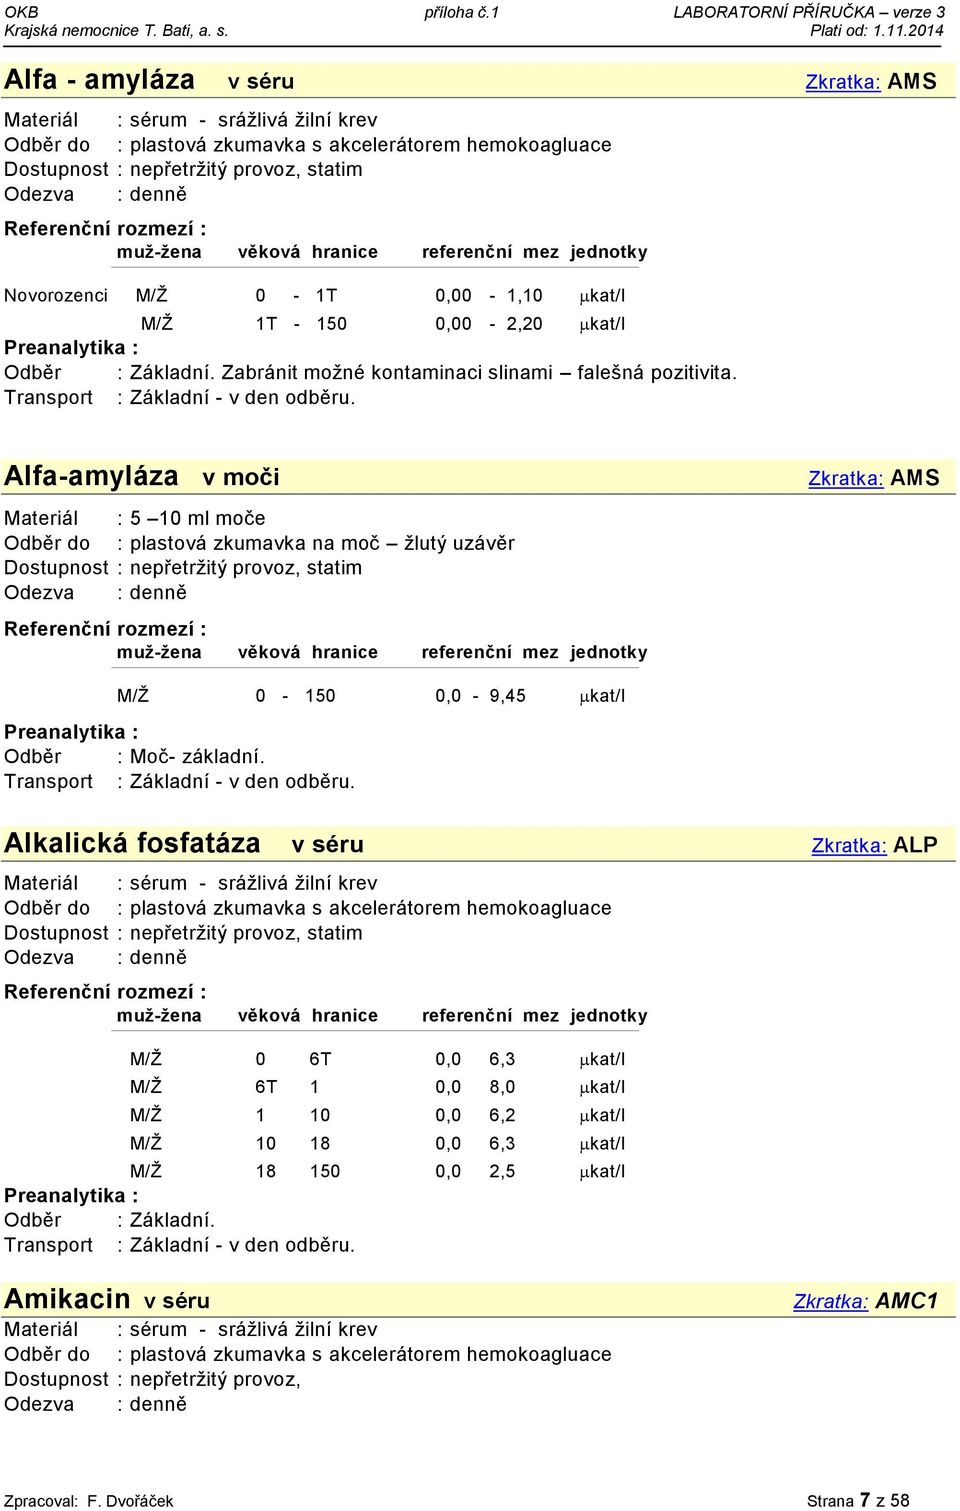 Alkalická fosfatáza v séru Zkratka: ALP M/Ž 0 6T 0,0 6,3 kat/l M/Ž 6T 1 0,0 8,0 kat/l M/Ž 1 10 0,0 6,2 kat/l M/Ž 10 18 0,0